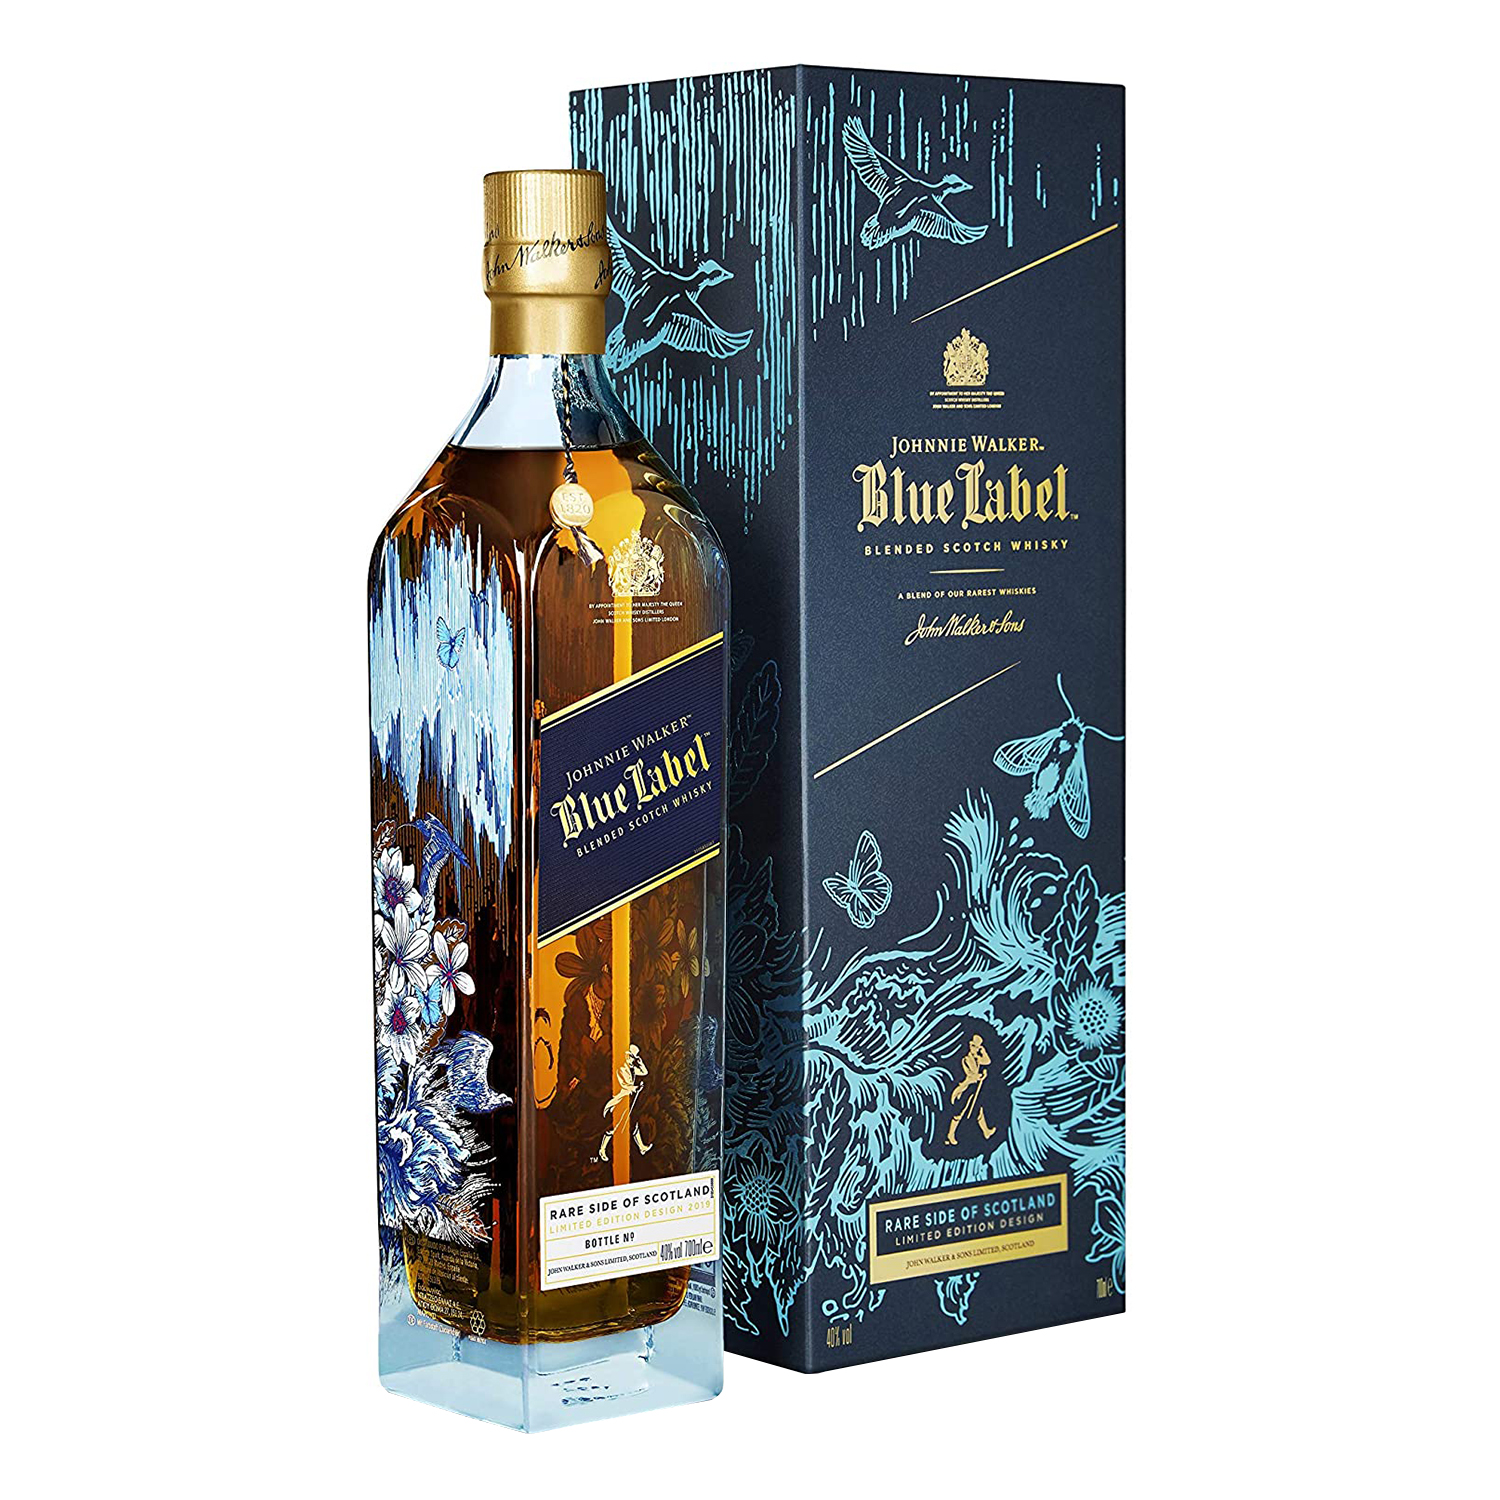 Johnnie Walker Blue Label Rare side of Scotland Limited edition 40% 0,7L